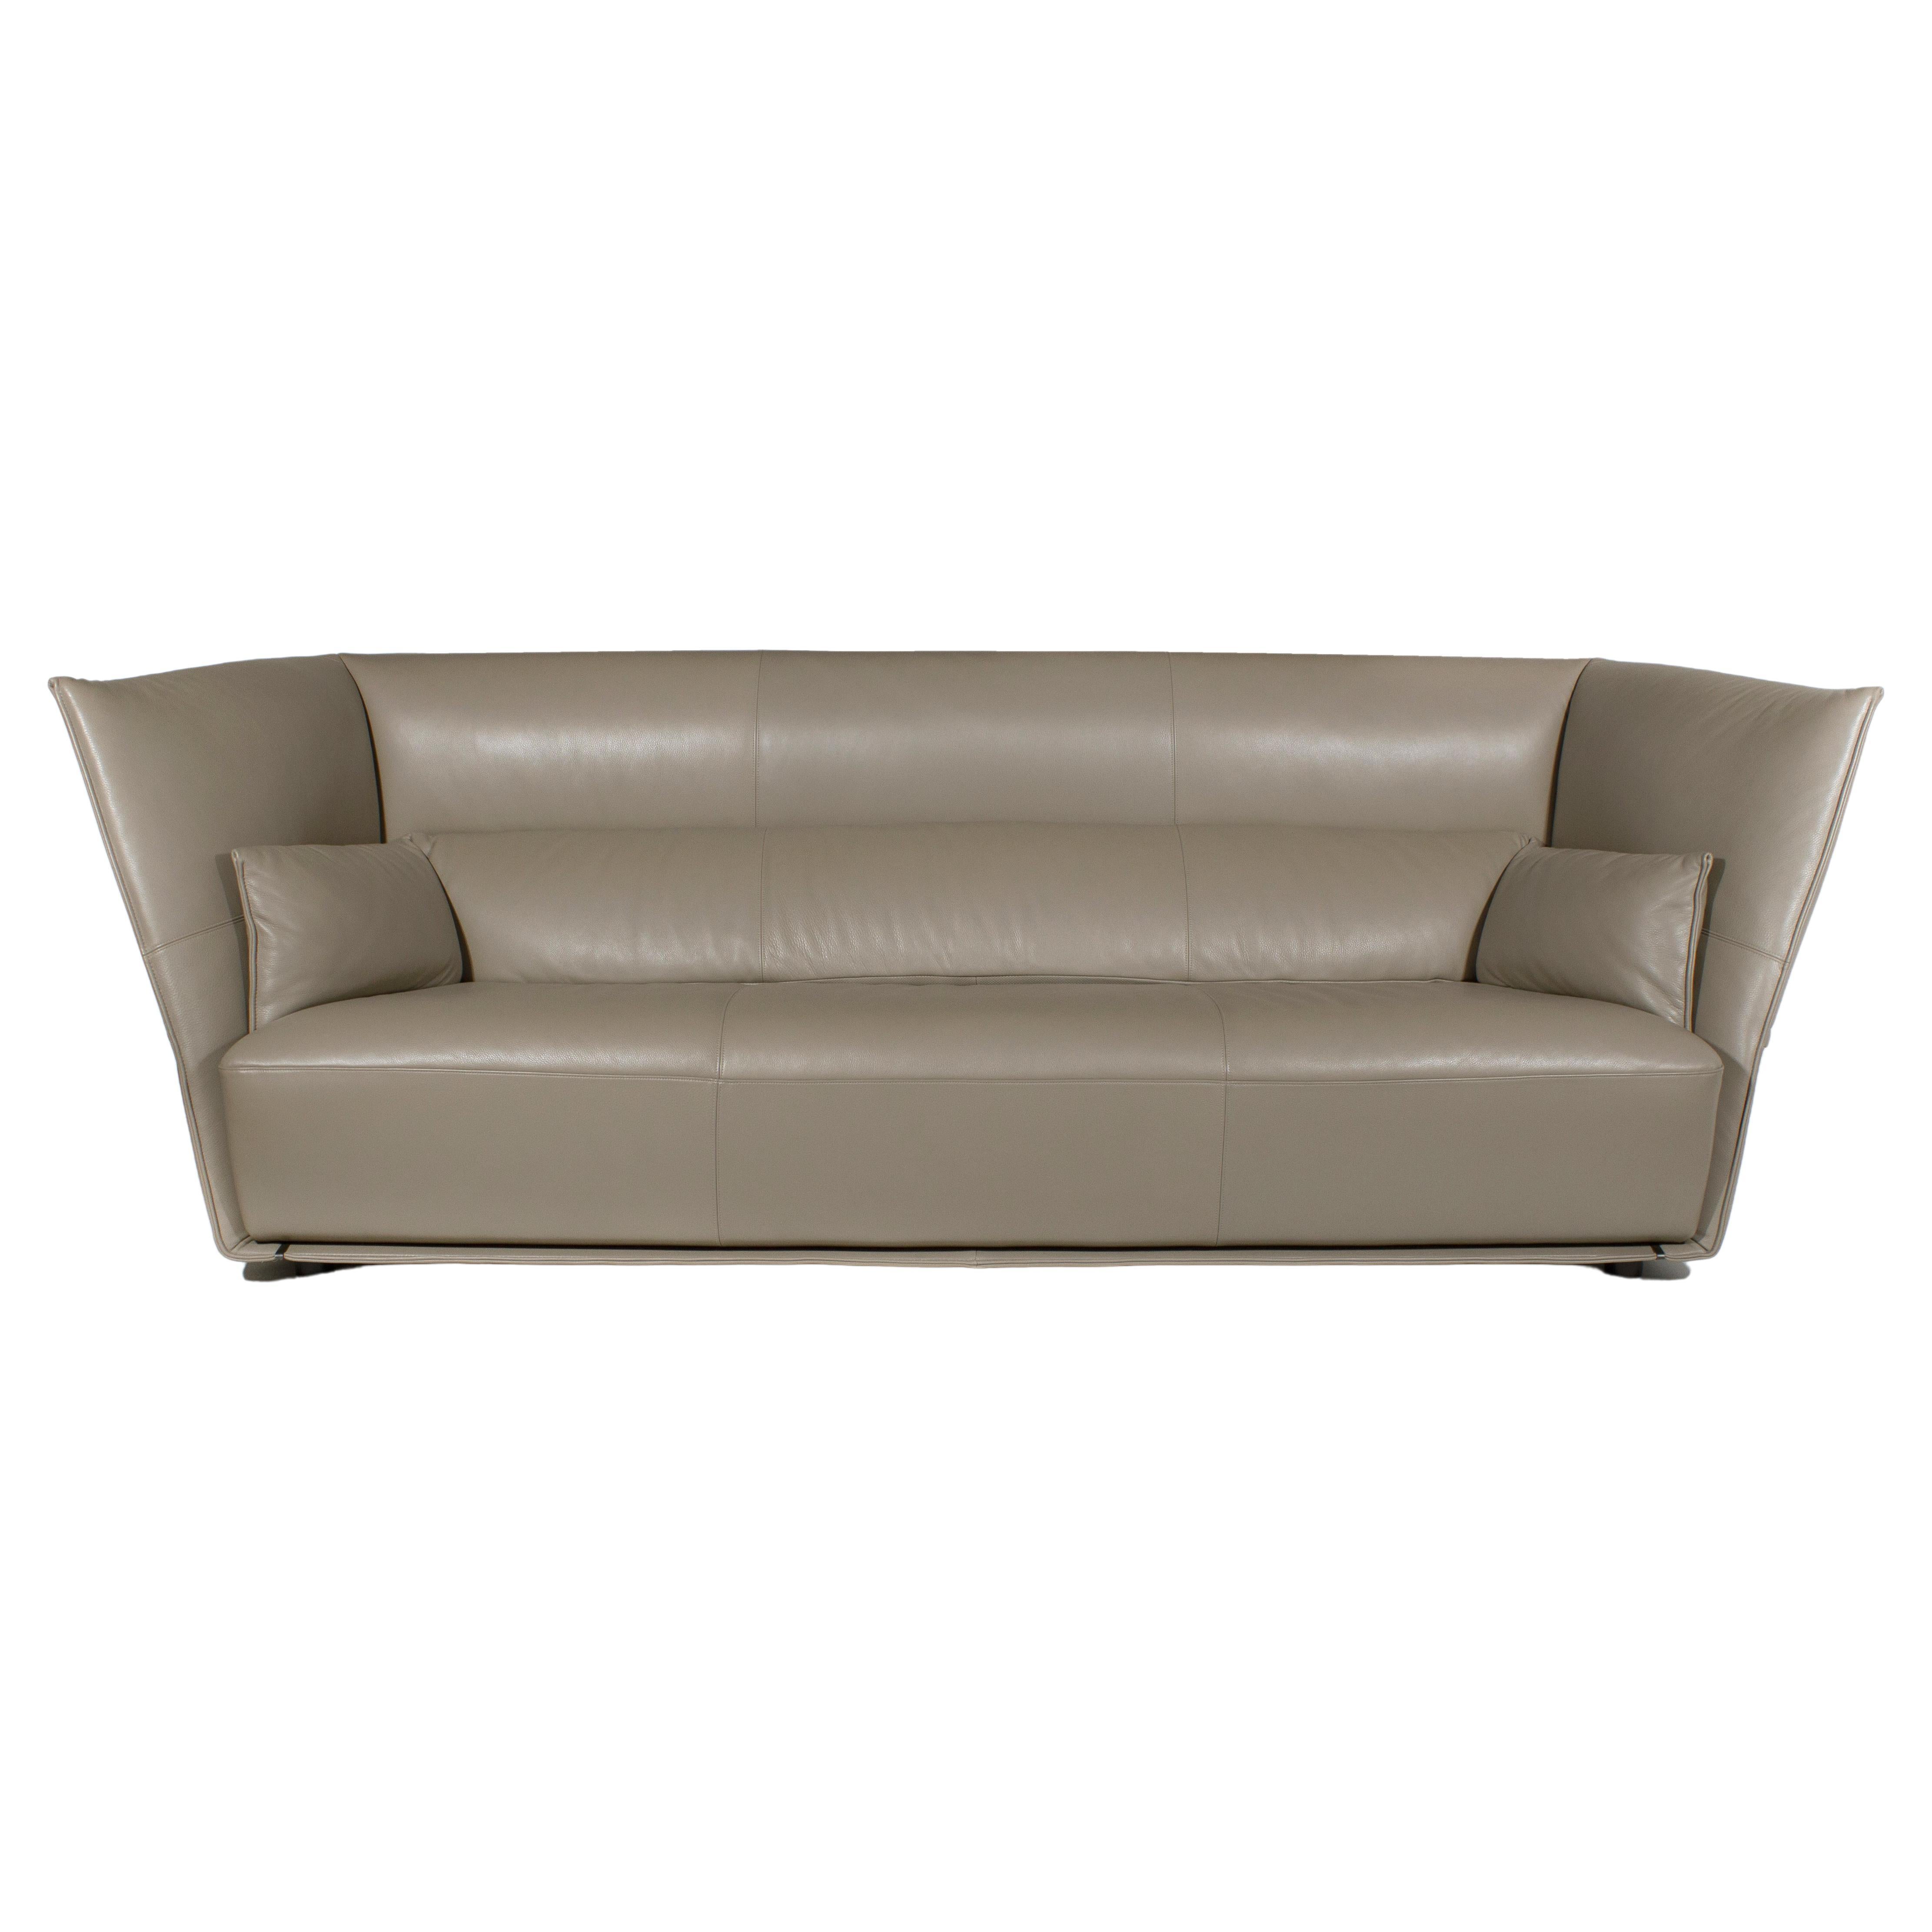 Paltrona Frau 'Almo' Modernes Leder Sofa entworfen von Garcia Cumini im Angebot